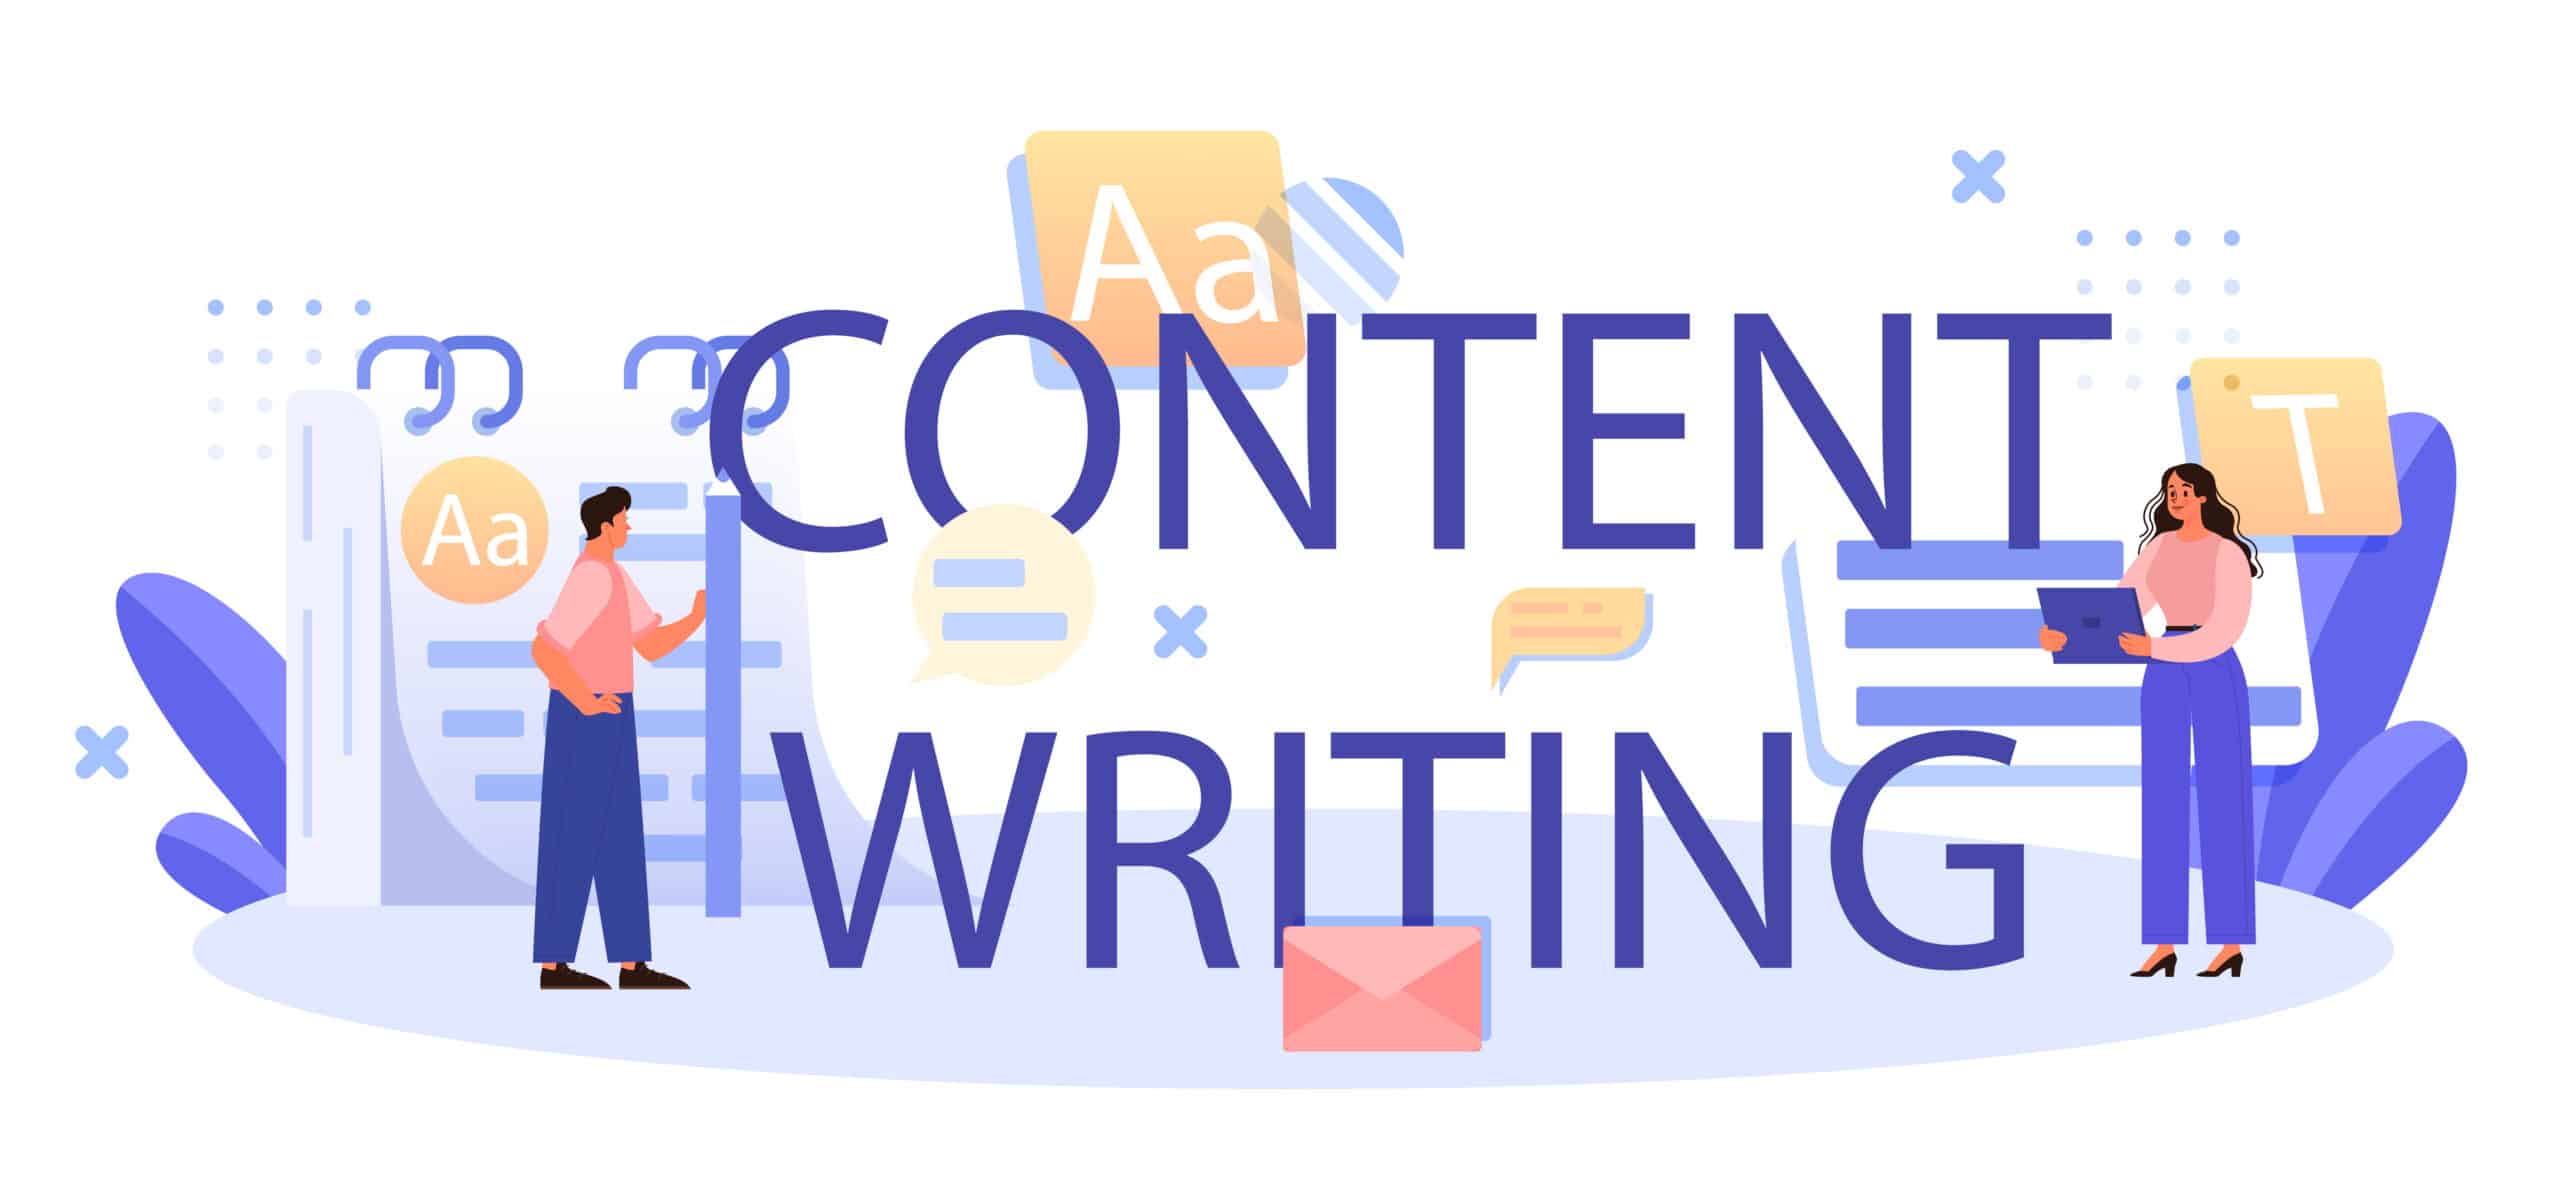 Content writing typographic header. Professional speaker or journalist